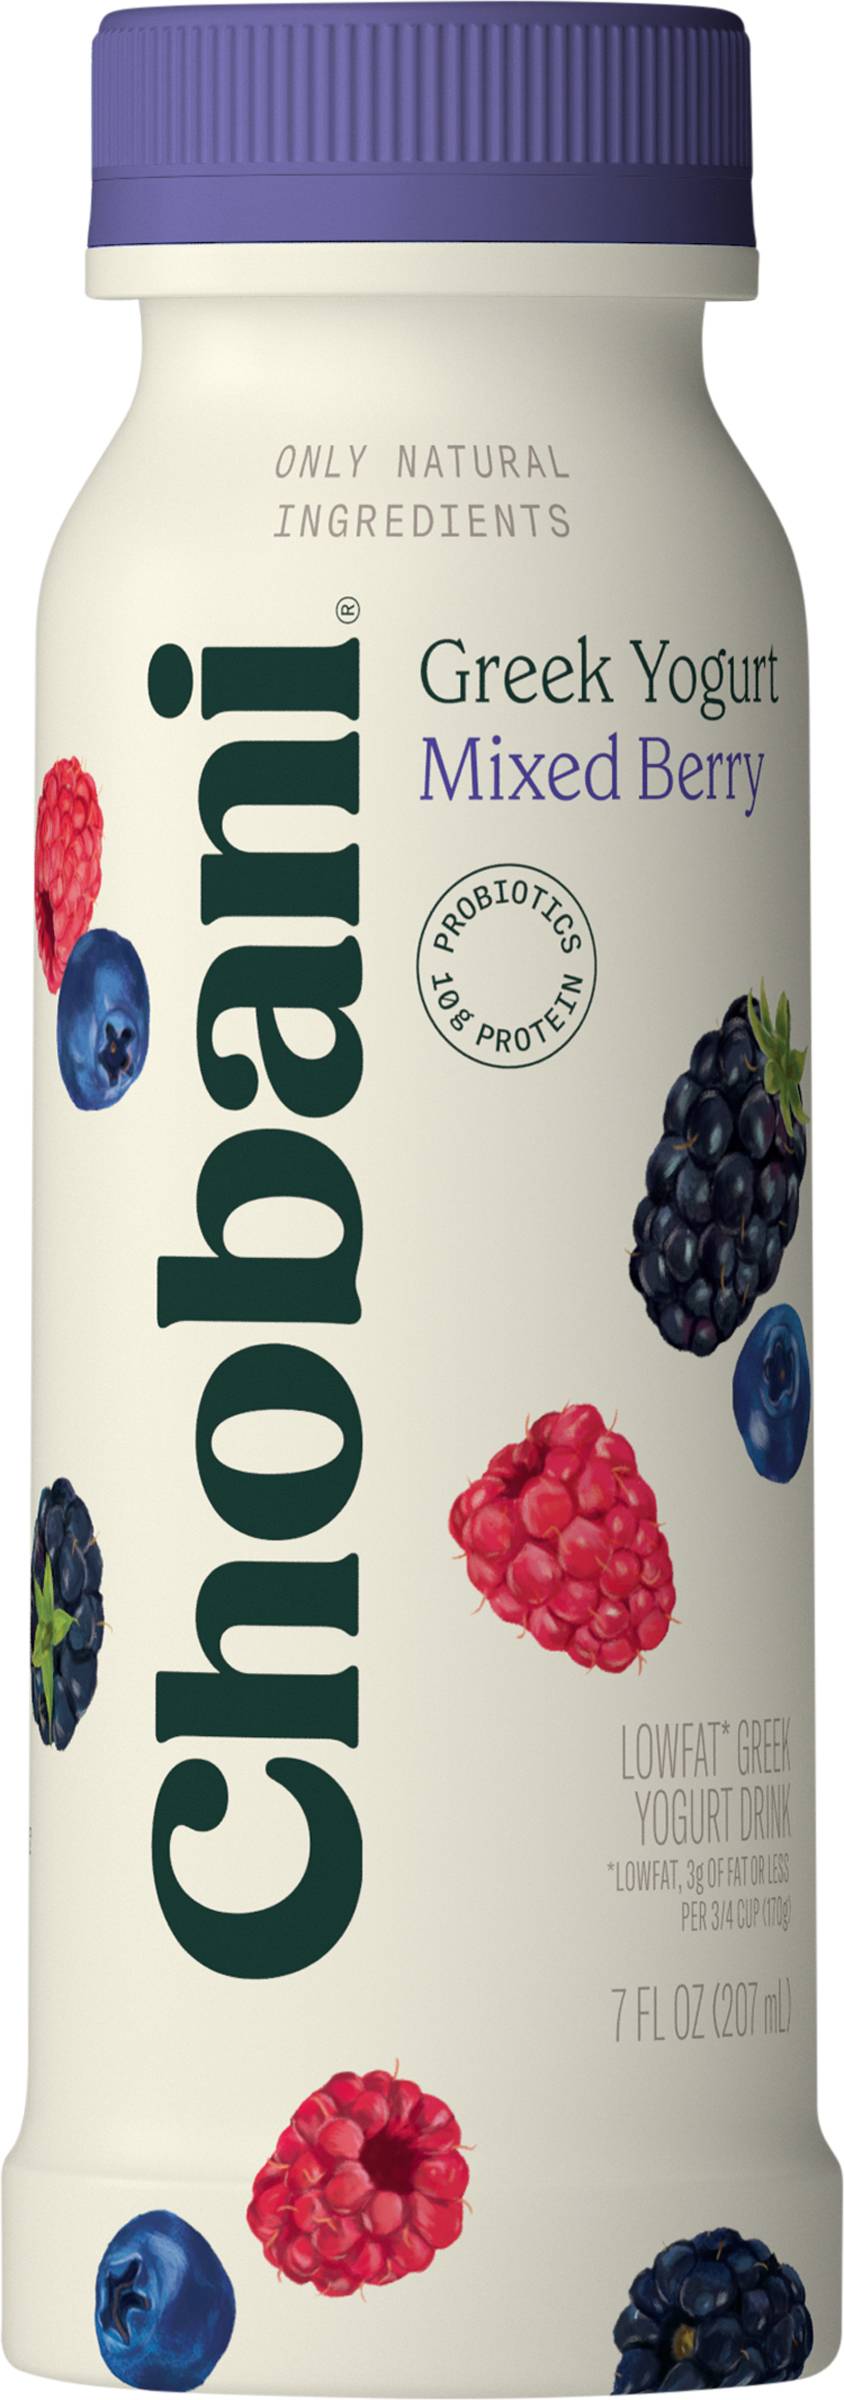 Chobani Low-Fat Greek Yogurt Drink (mixed berry)